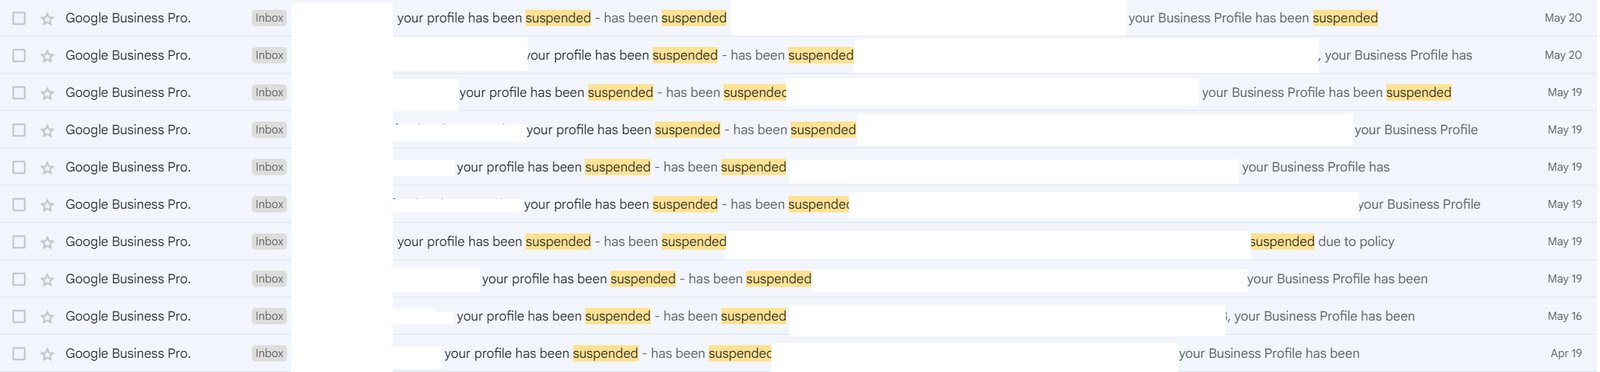 forum post suspended.jpg